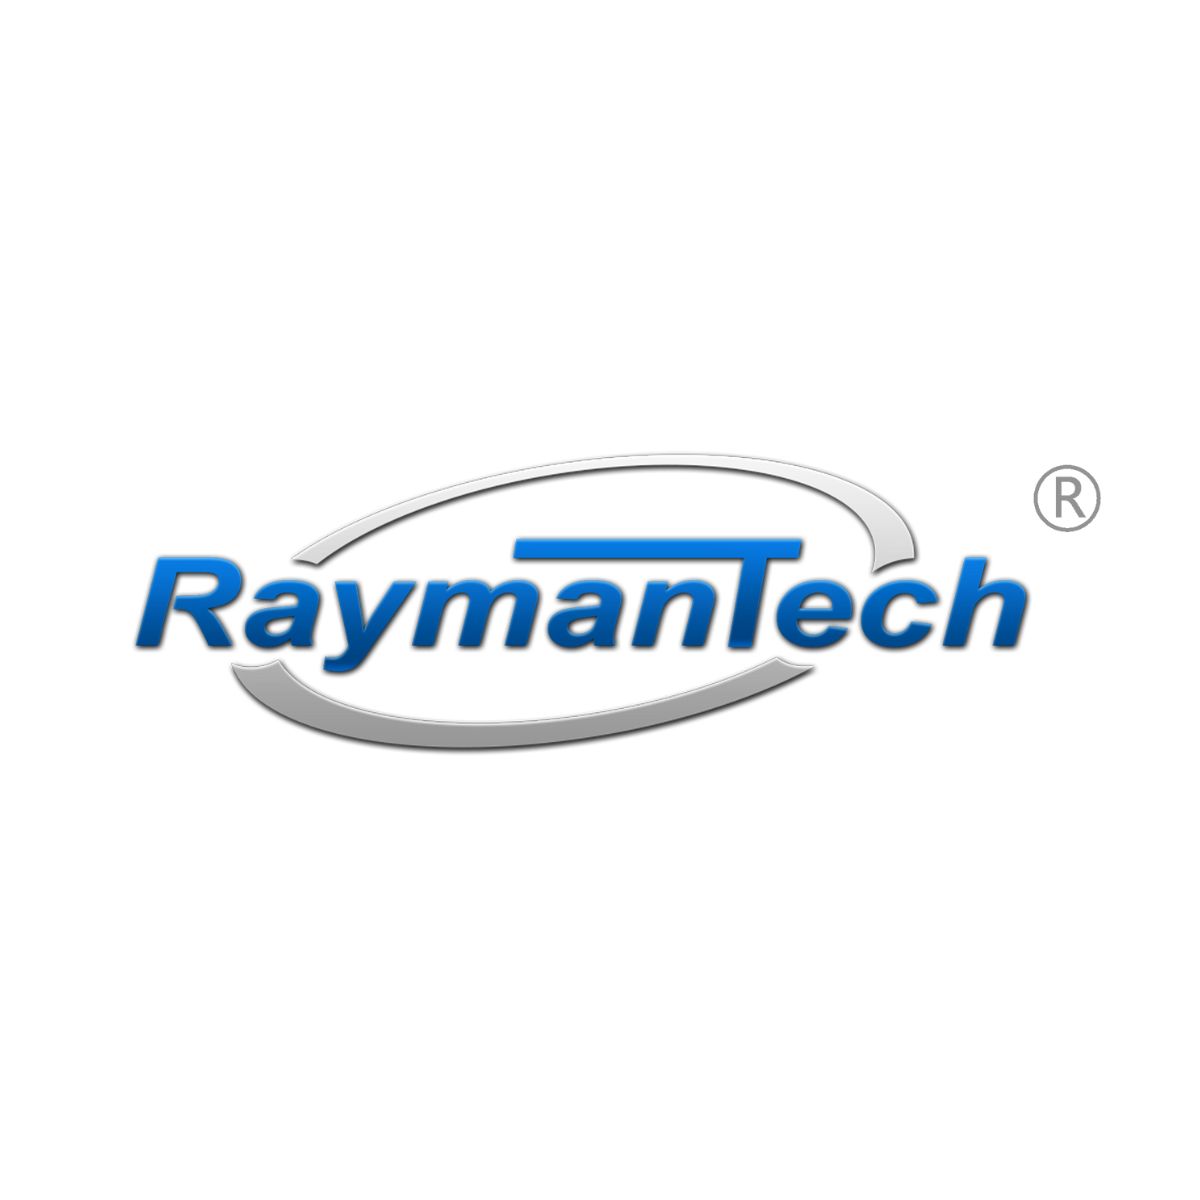 RaymanTech